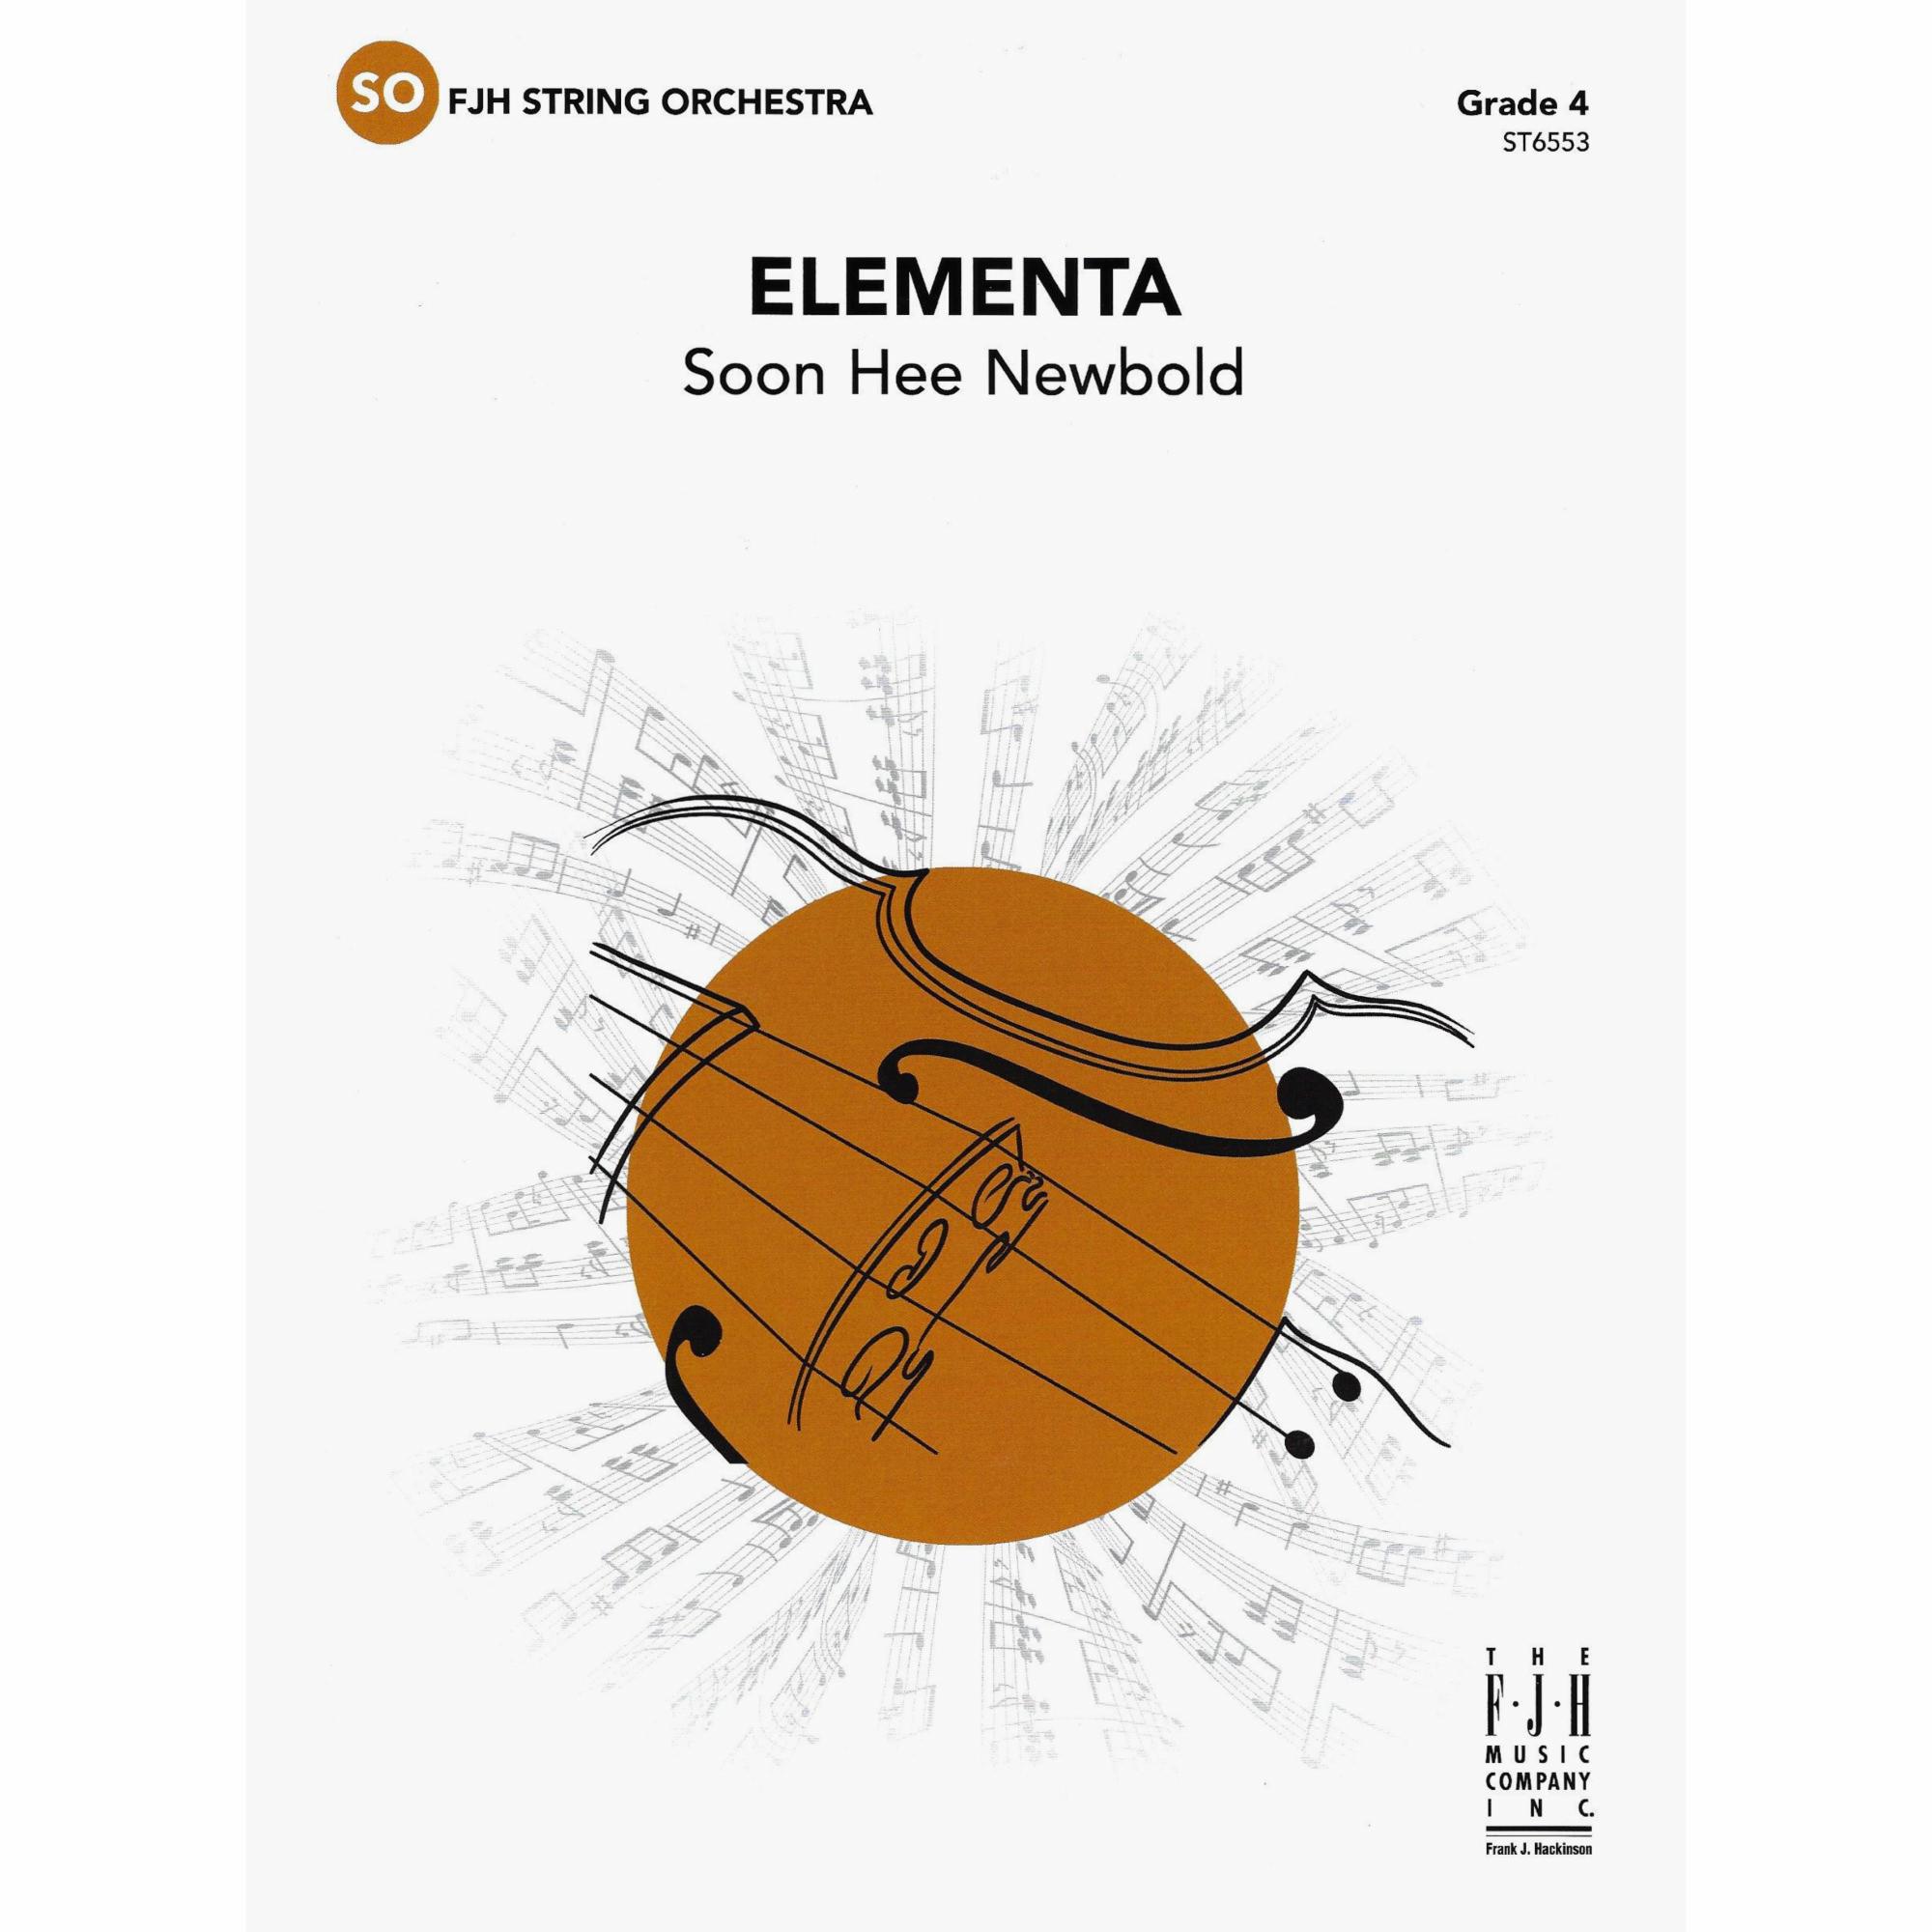 Elementa for String Orchestra